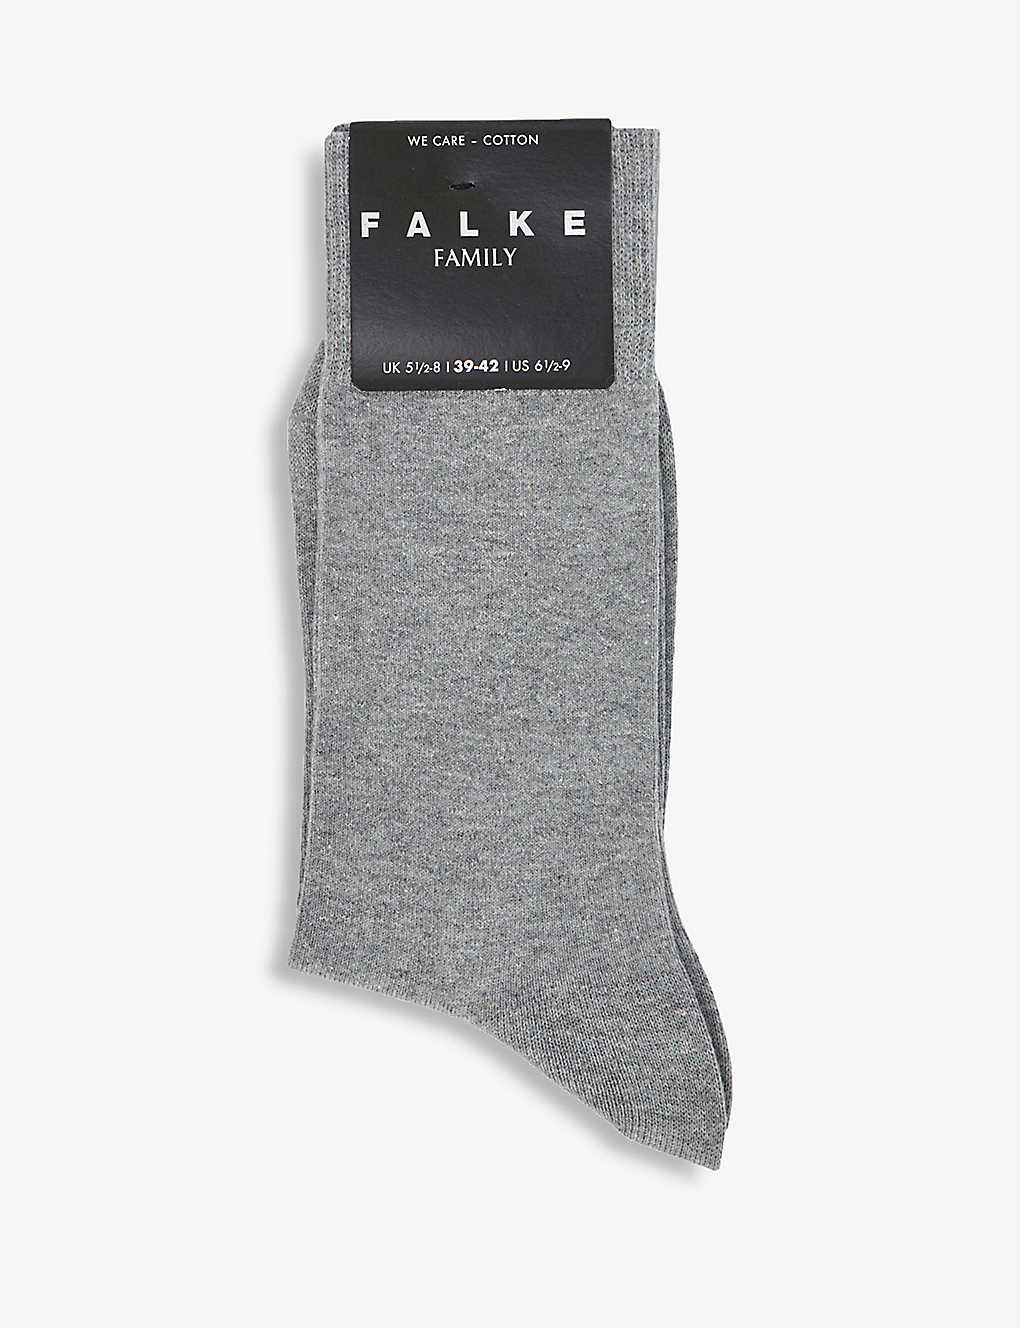 Falke Family Cotton And Recycled-polyamide Blend Socks In Light Greymel.